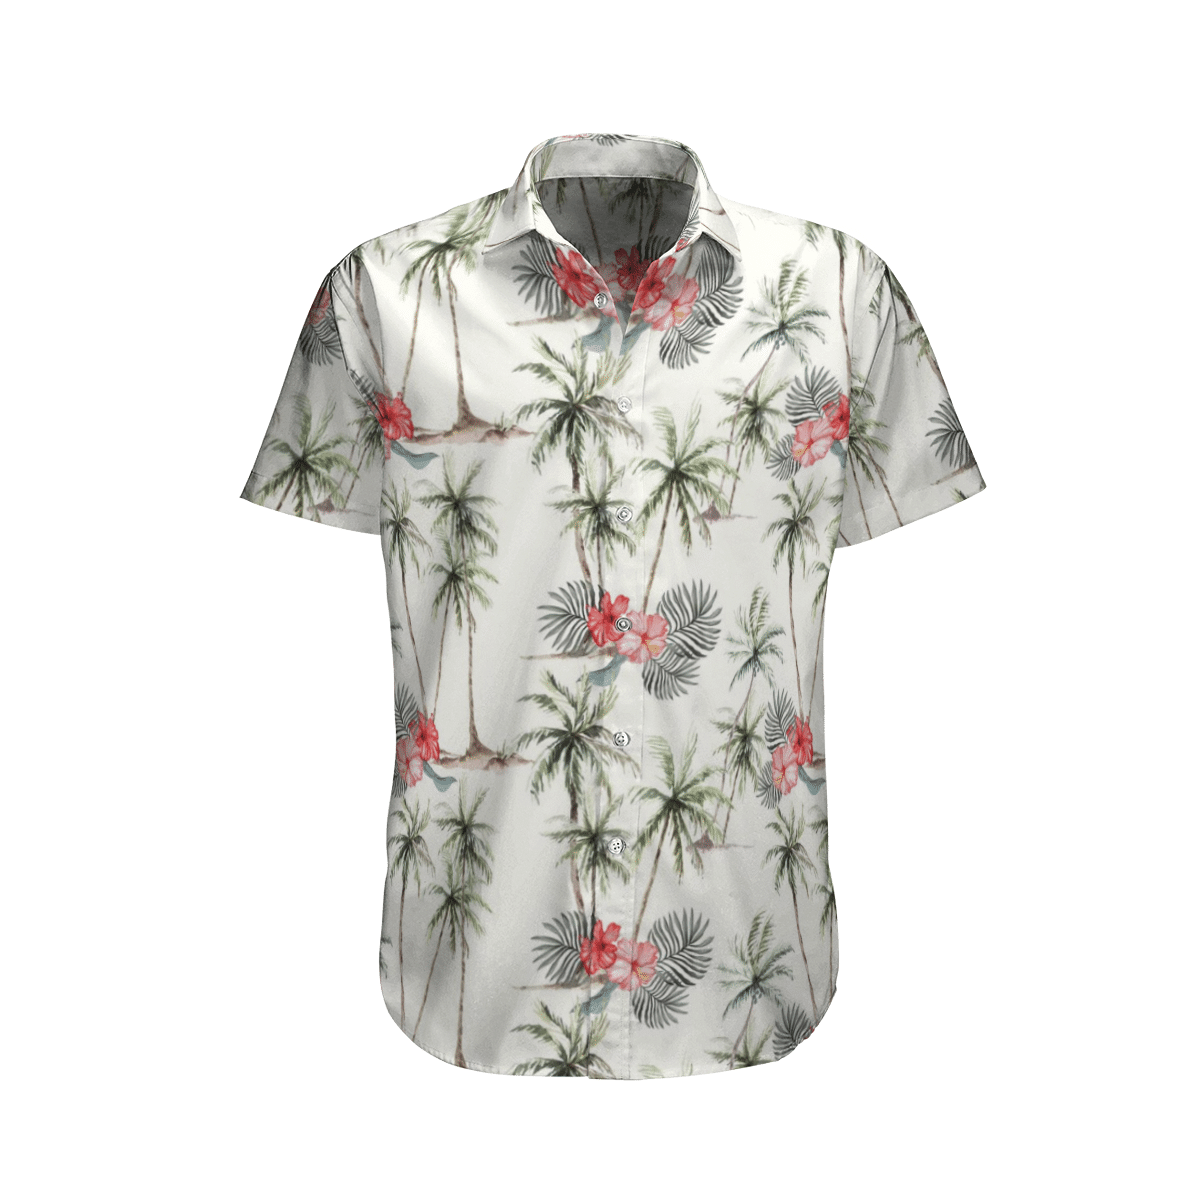 Get a new Hawaiian shirt to enjoy summer vacation 4